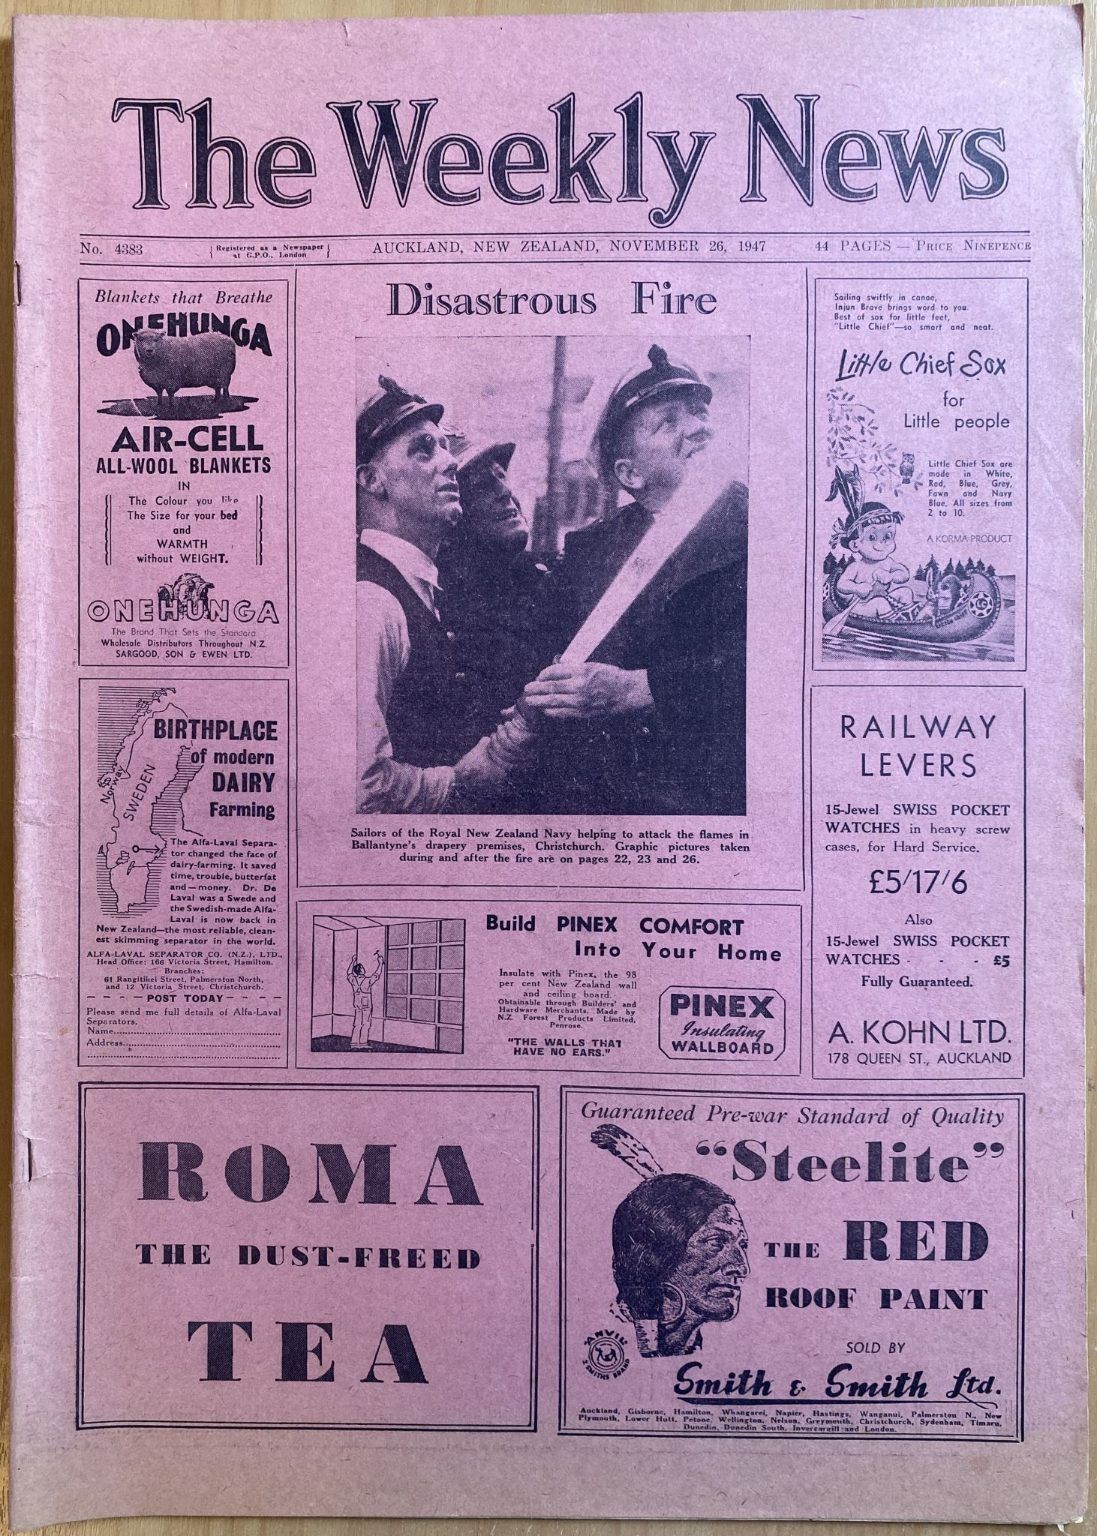 OLD NEWSPAPER: The Weekly News, No. 4383, 26 November 1947